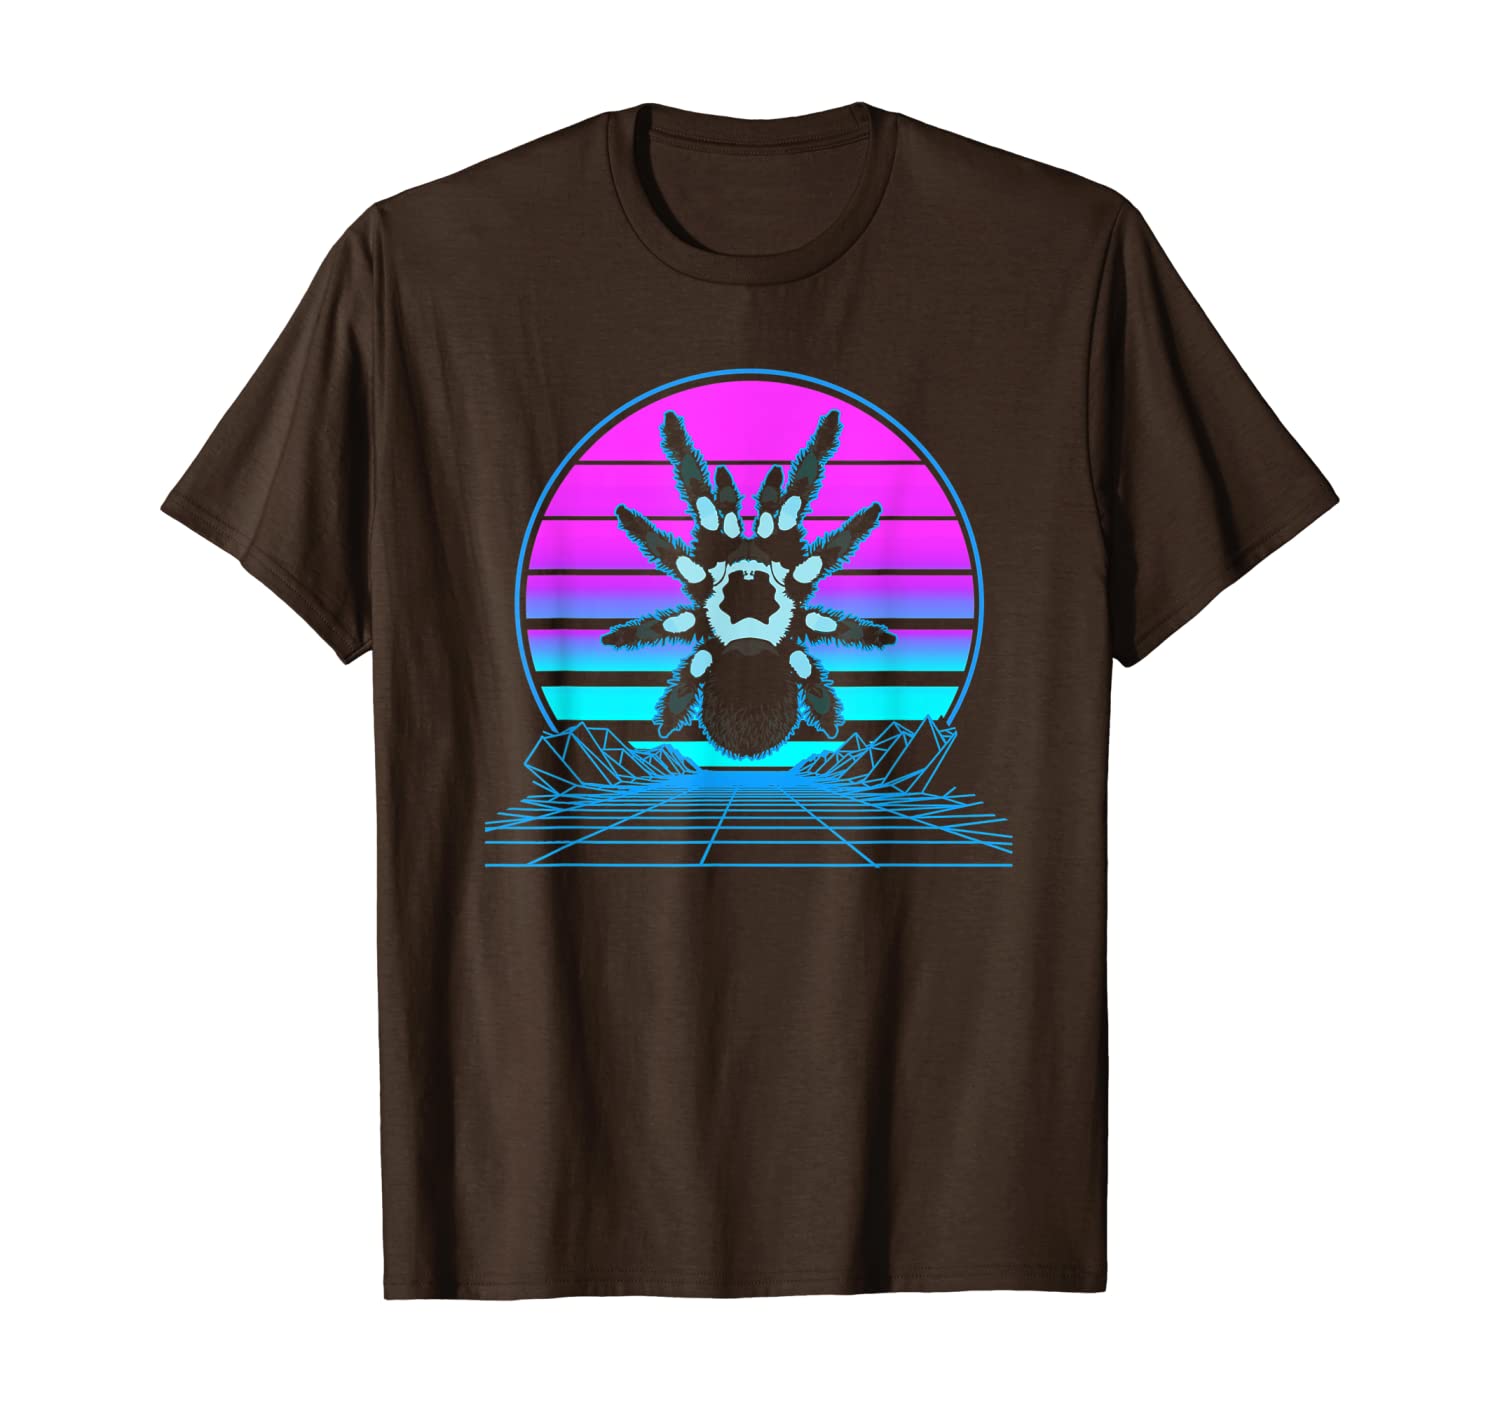 

Tarantula Pastel Goth Vaporwave T-Shirt, Mainly pictures